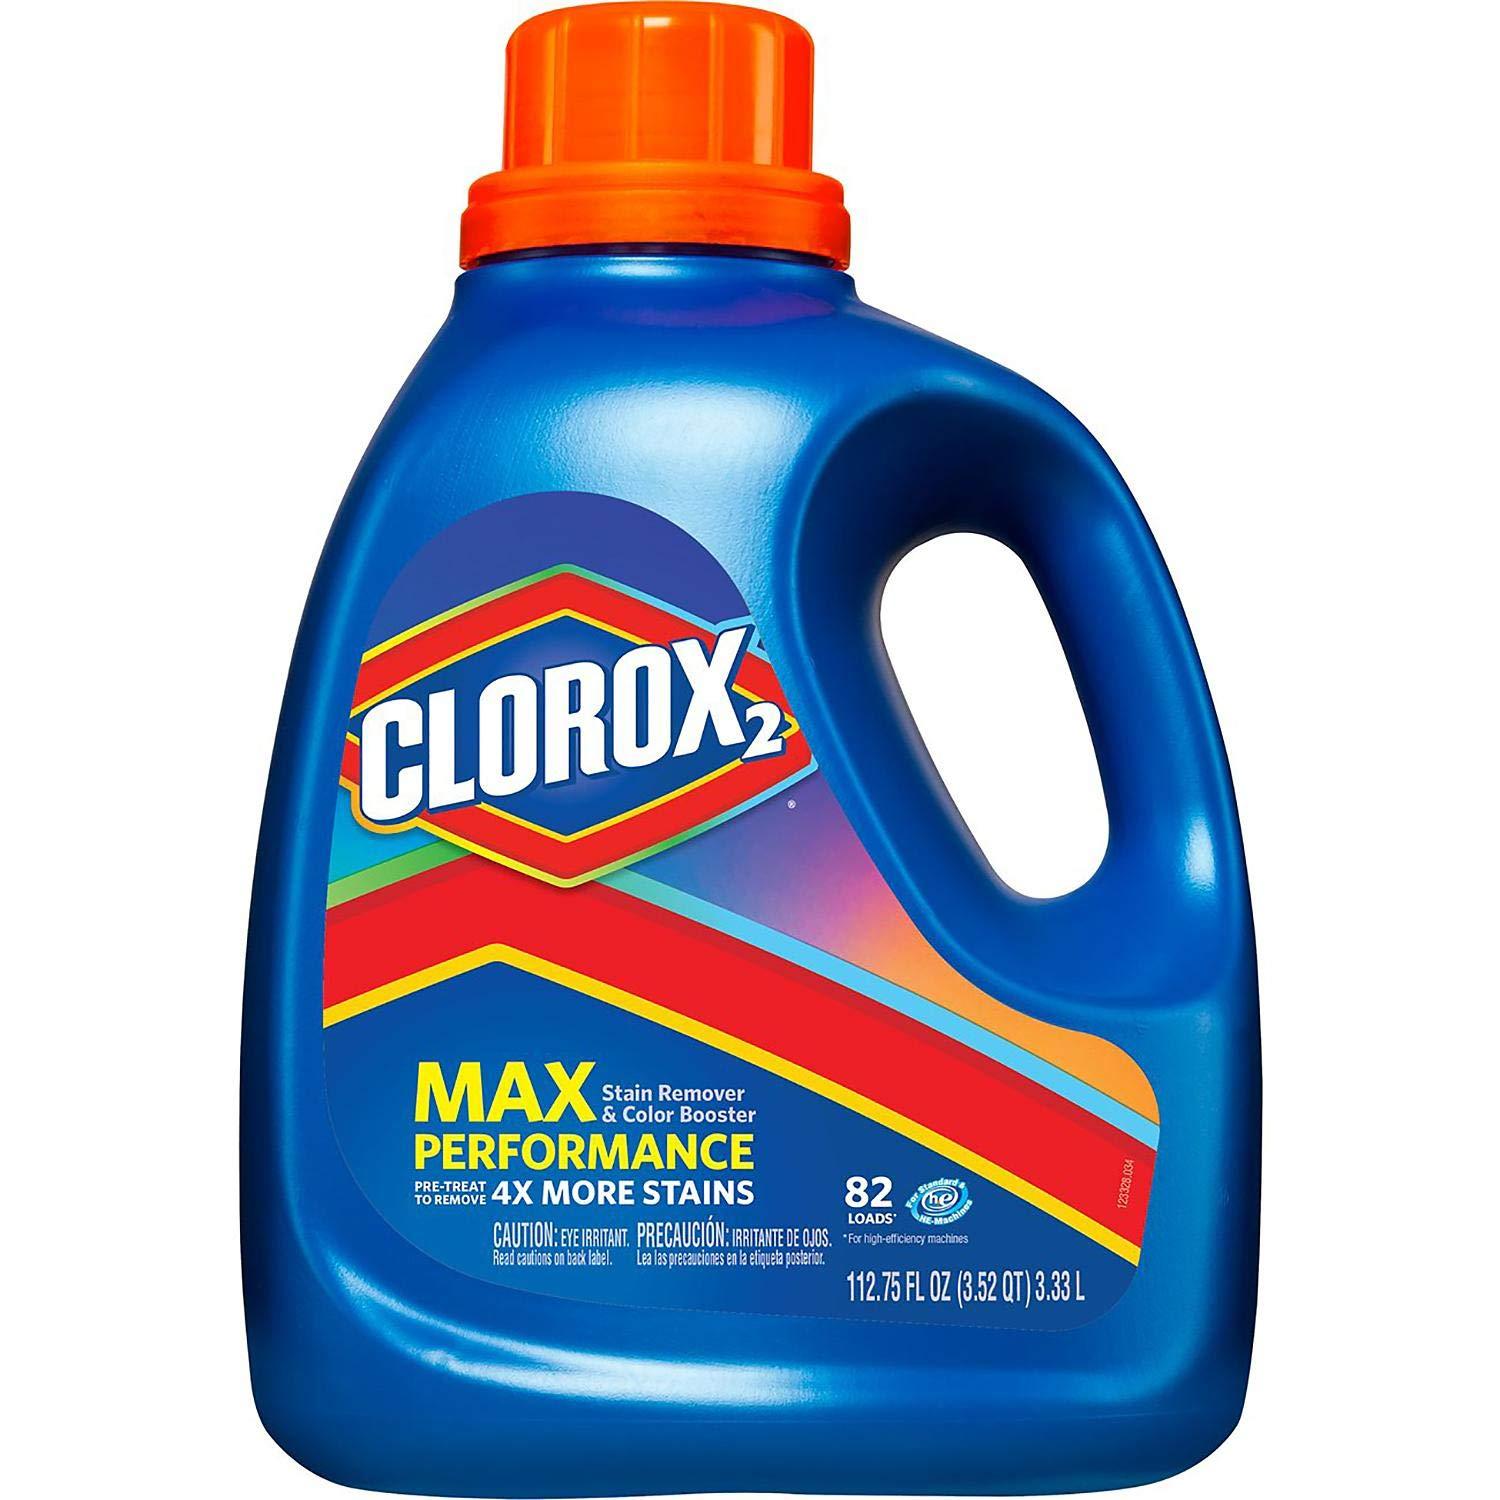 Clorox 2 Performance Stain Remover Color Boost, 82 Loads, 112.75 Fl Oz